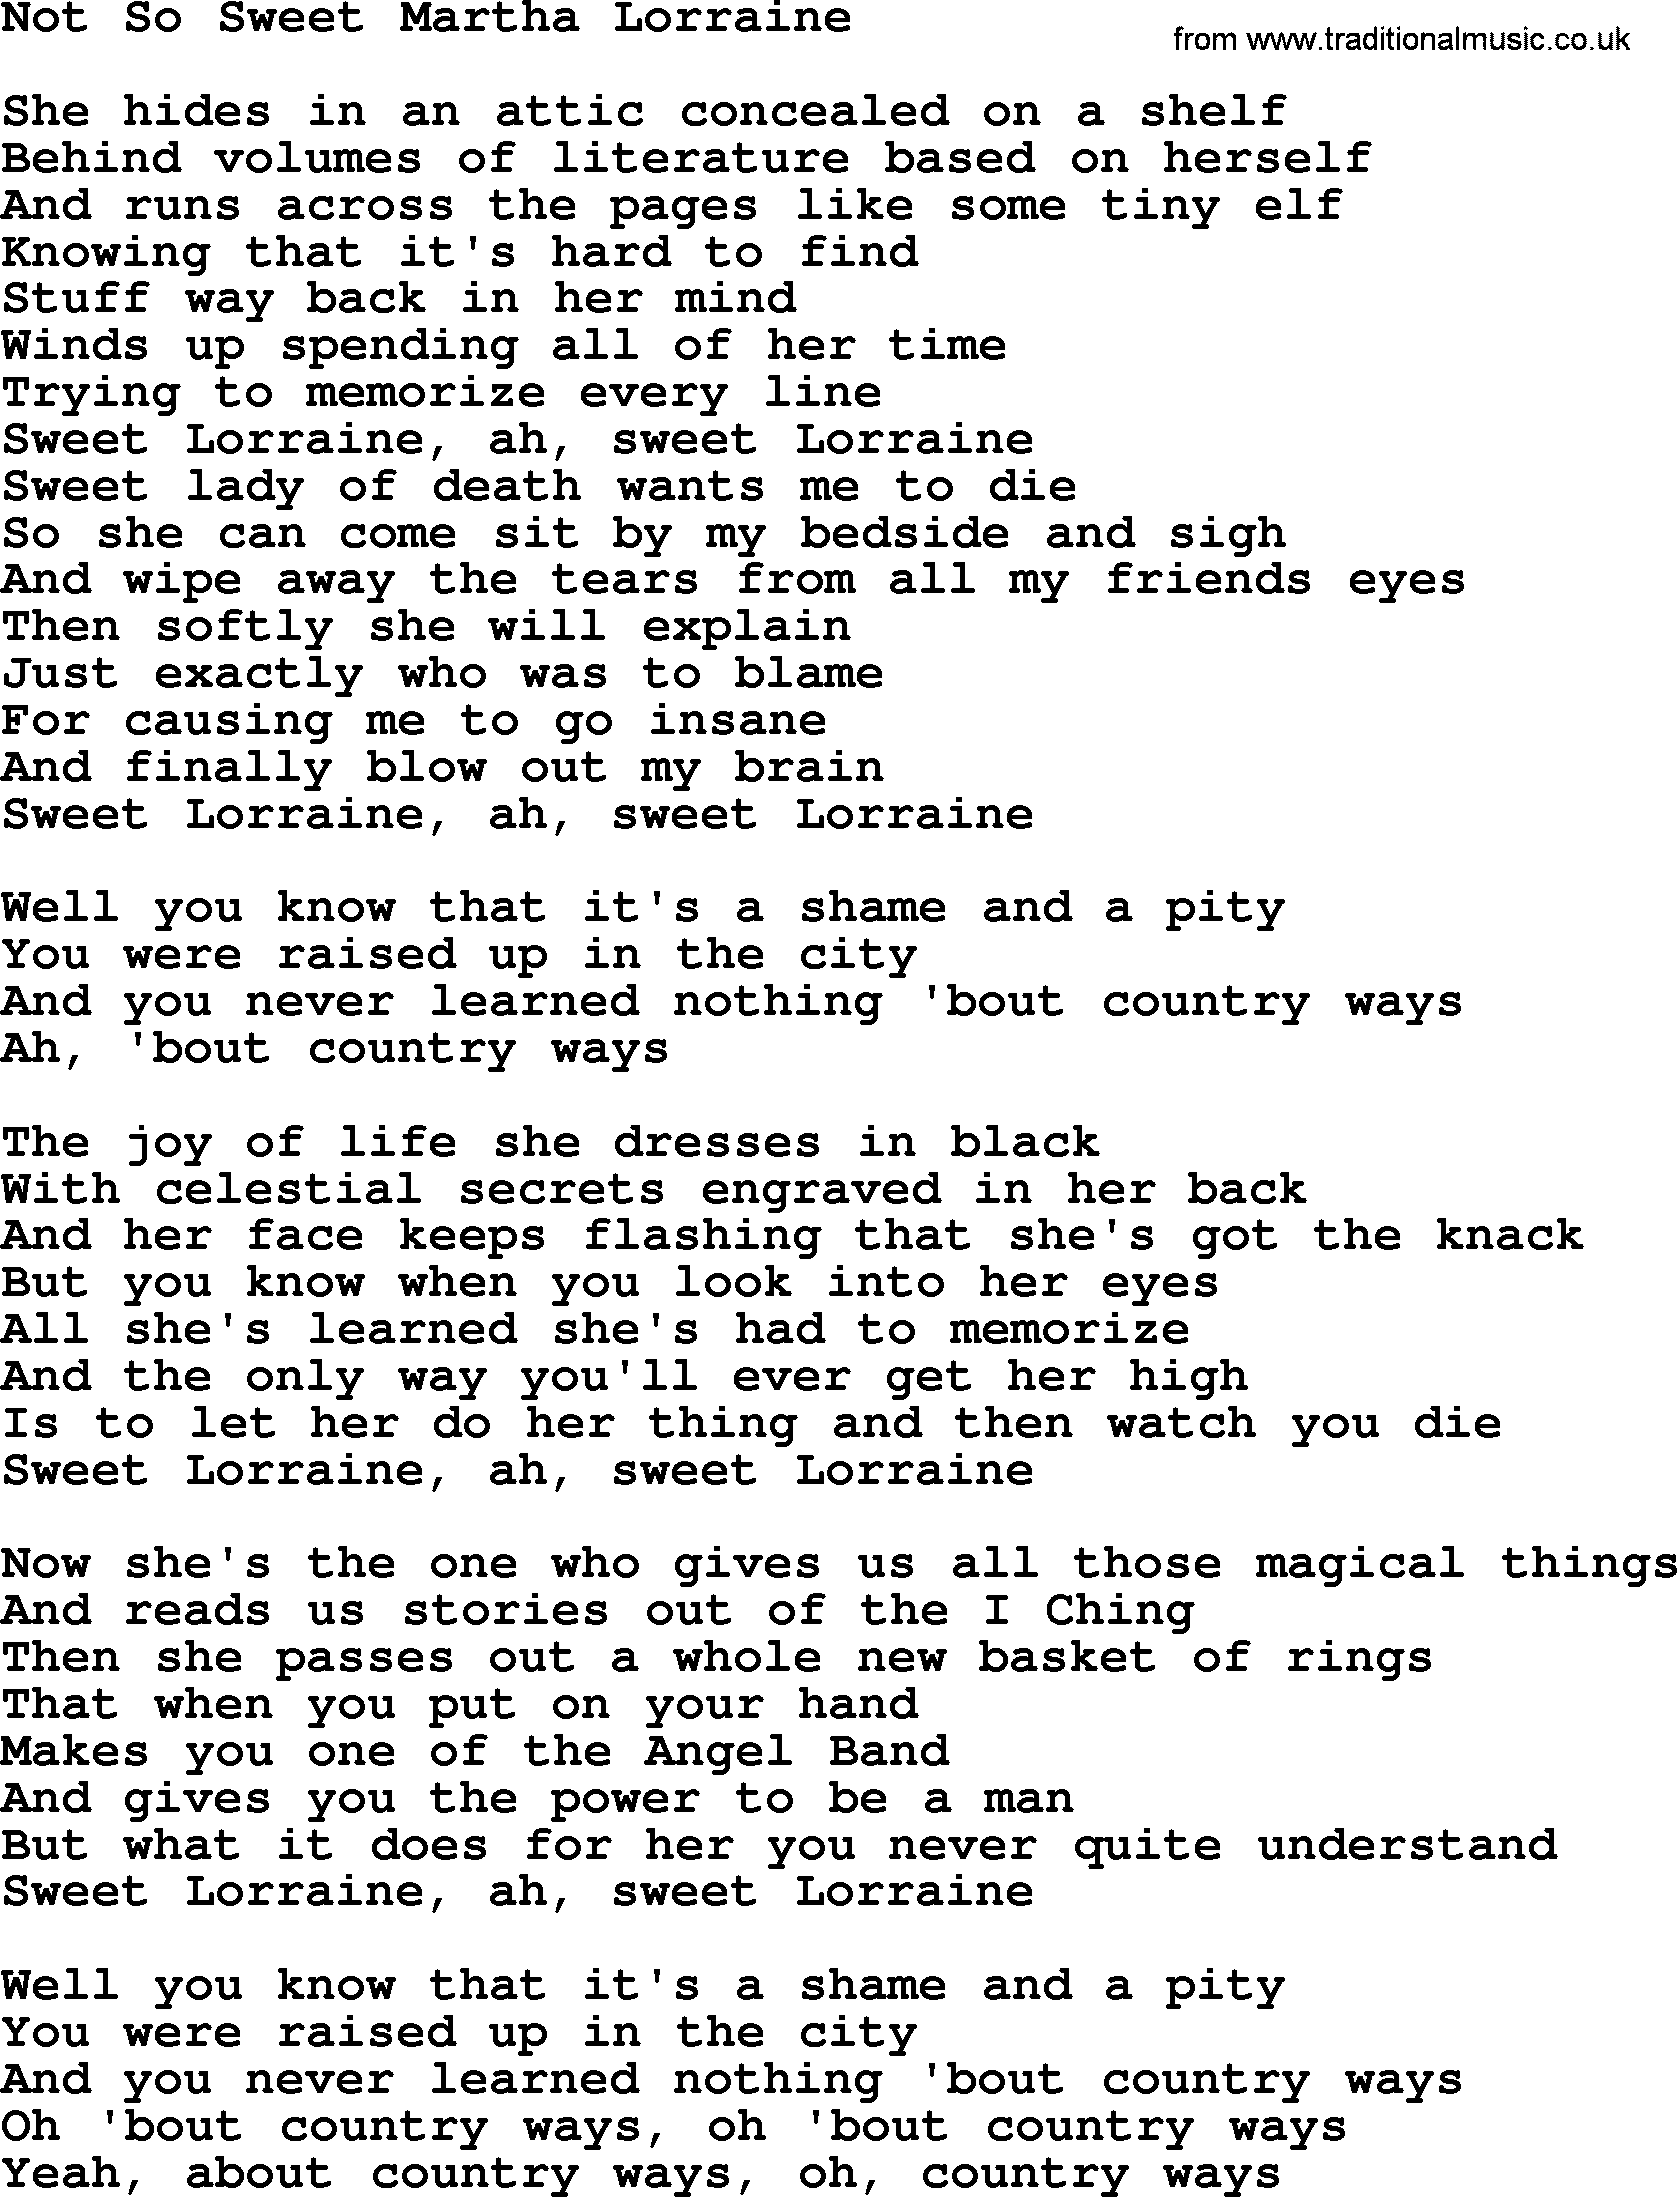 The Byrds song Not So Sweet Martha Lorraine, lyrics